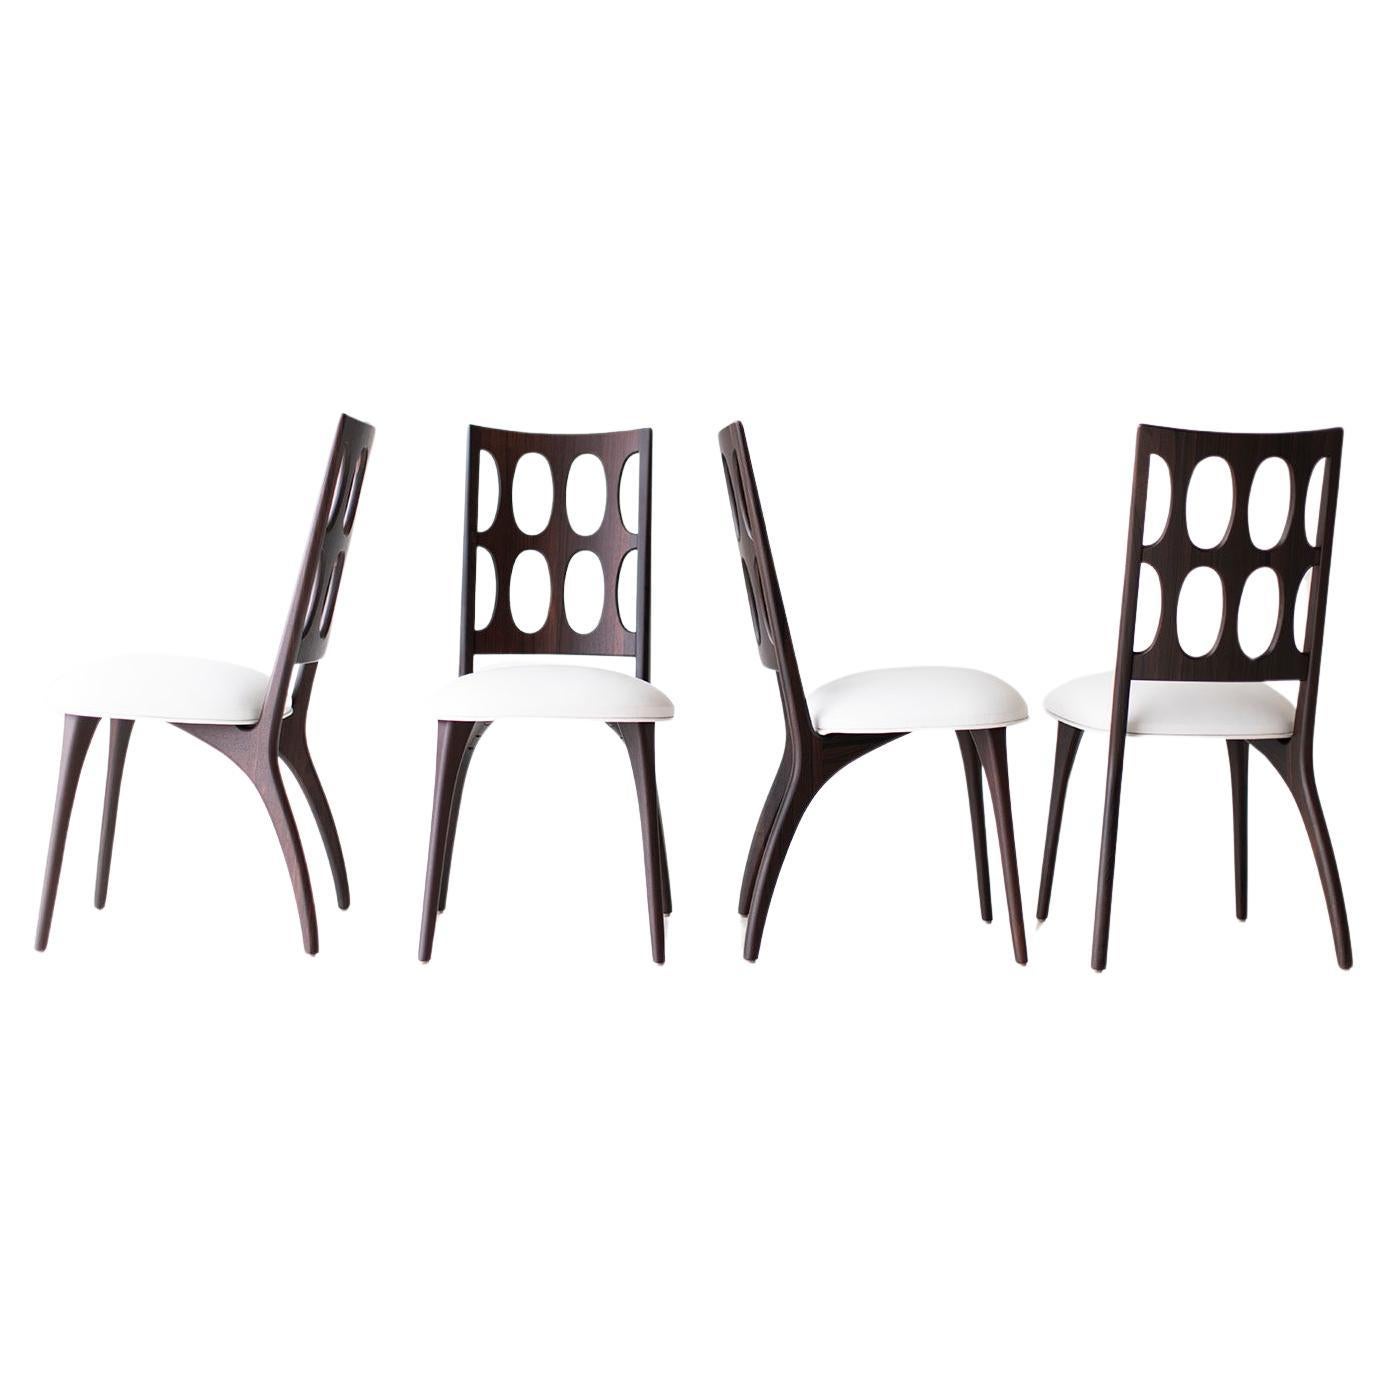 Chaises de salle à manger Craft Associates, chaises de salle à manger The Moderns Modernity en noyer, cuir